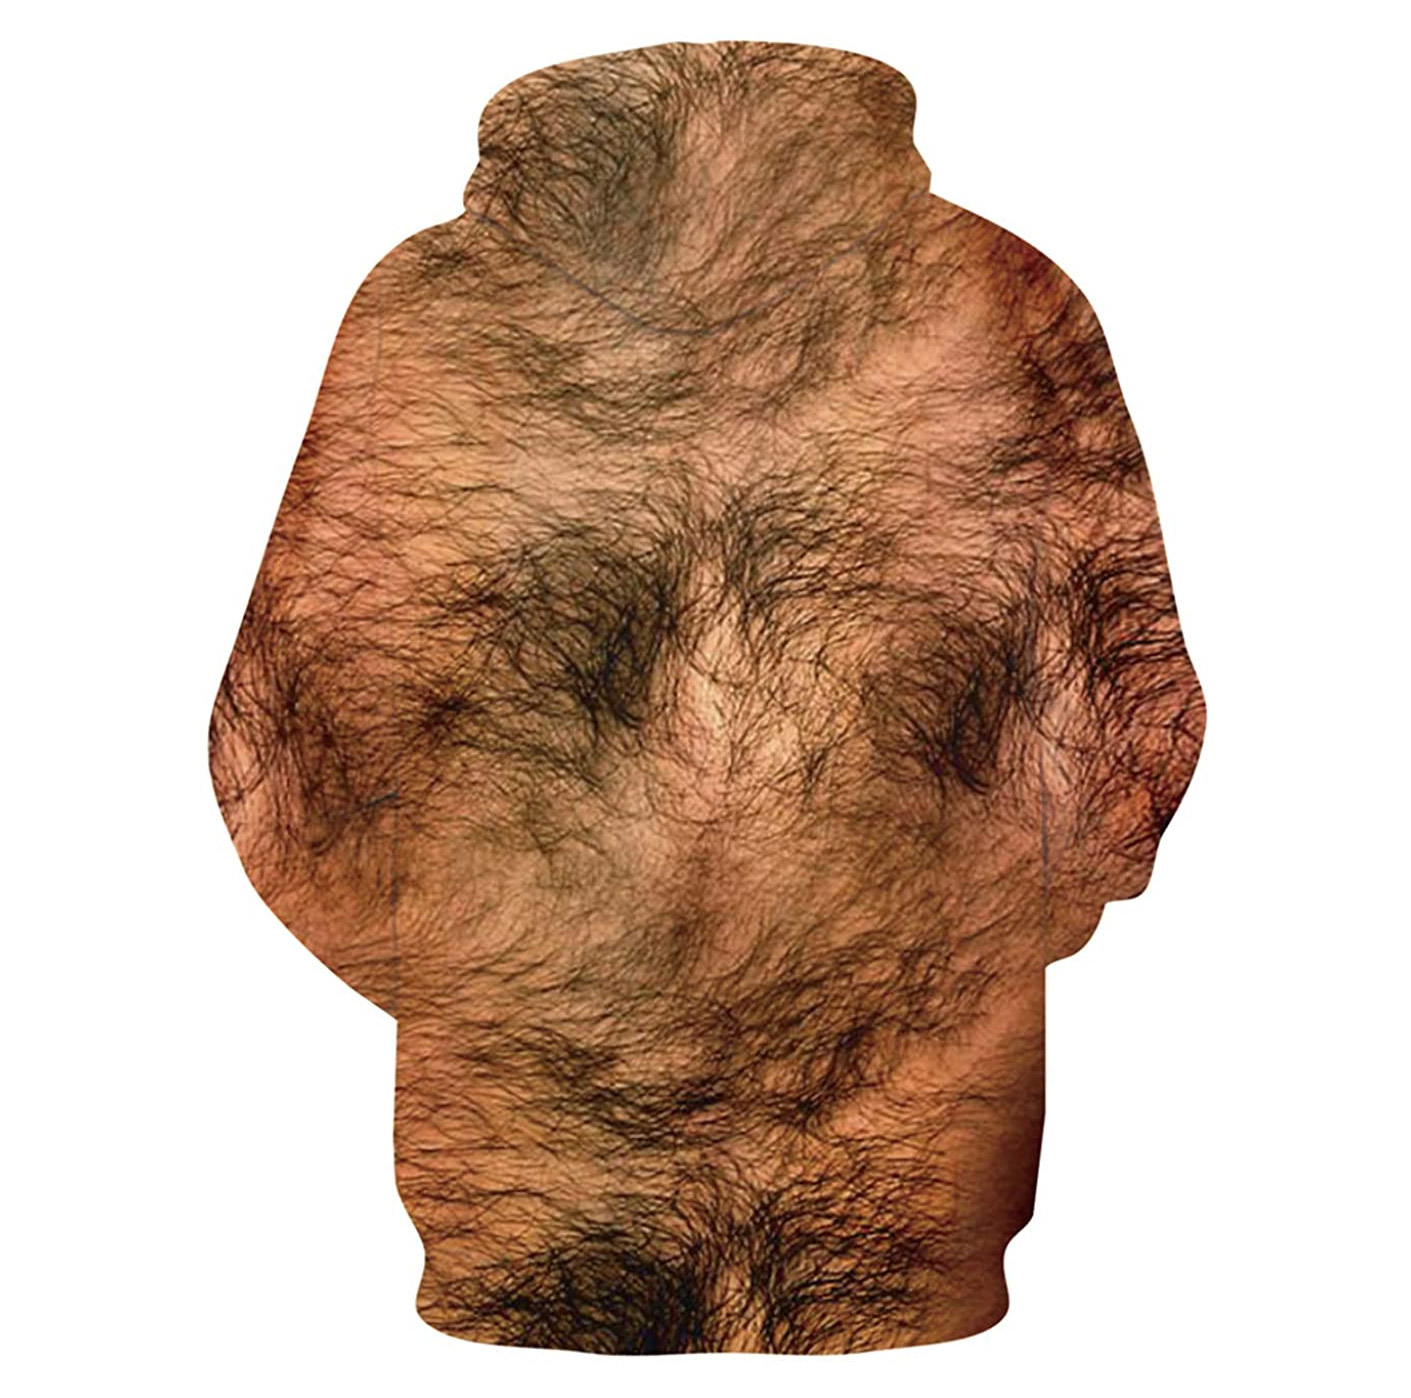 Hairy chest hoodie sweatshirt - Hairy back sweatshirt